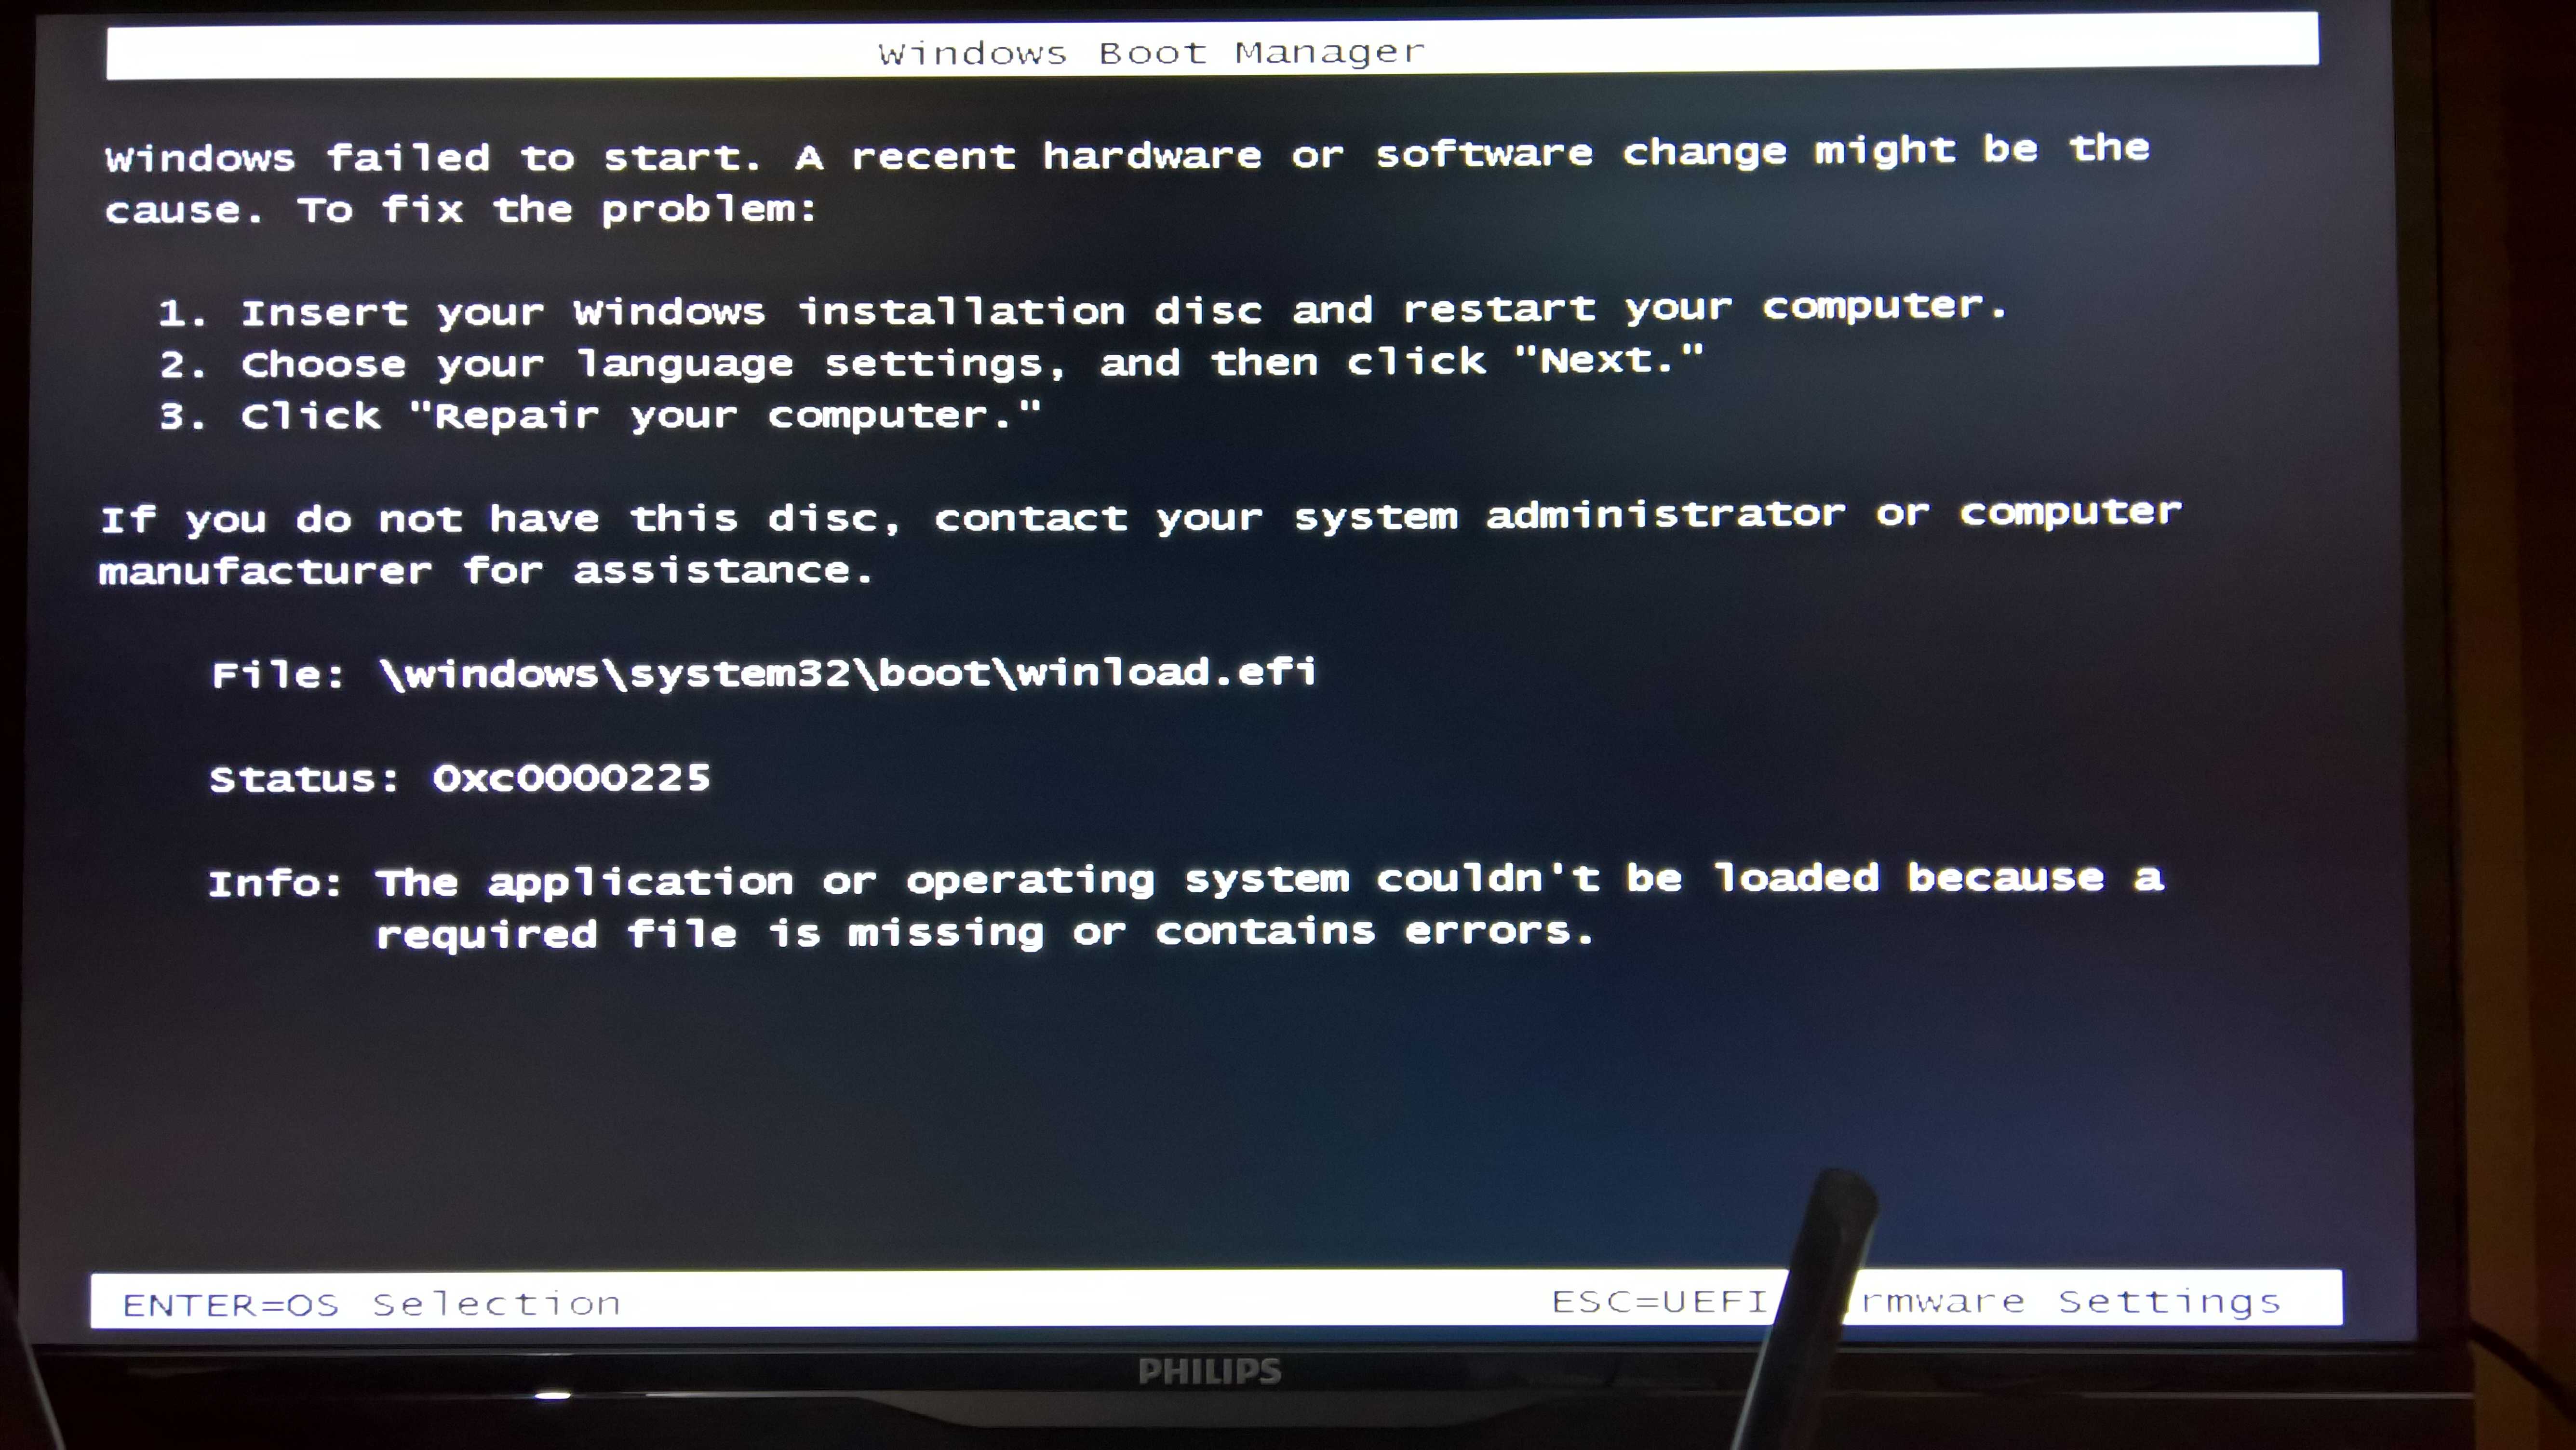 0xc0000225 при загрузке или установке windows 7, 8, 10 с флешки или диска, как исправить ошибку windows failed to start